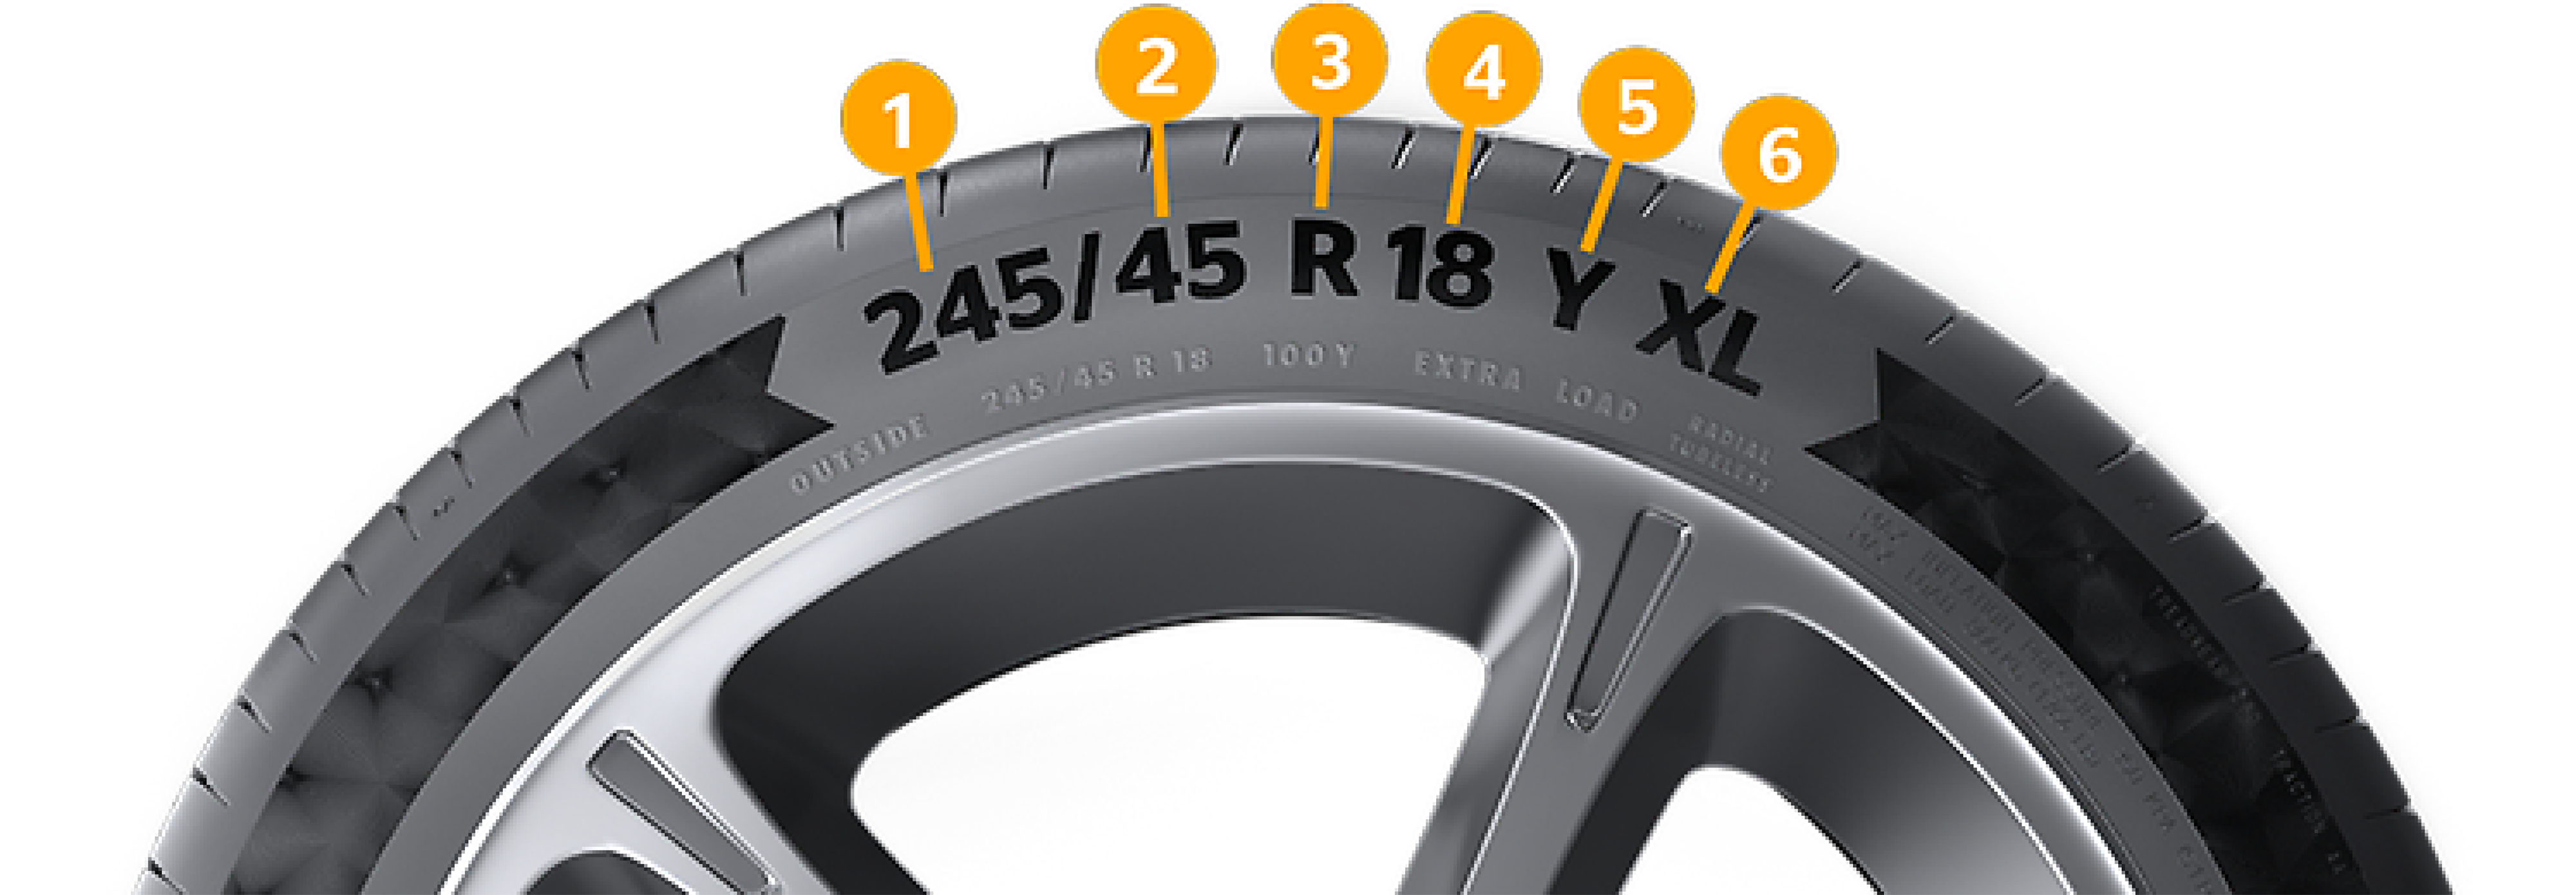 Tire markings illustration